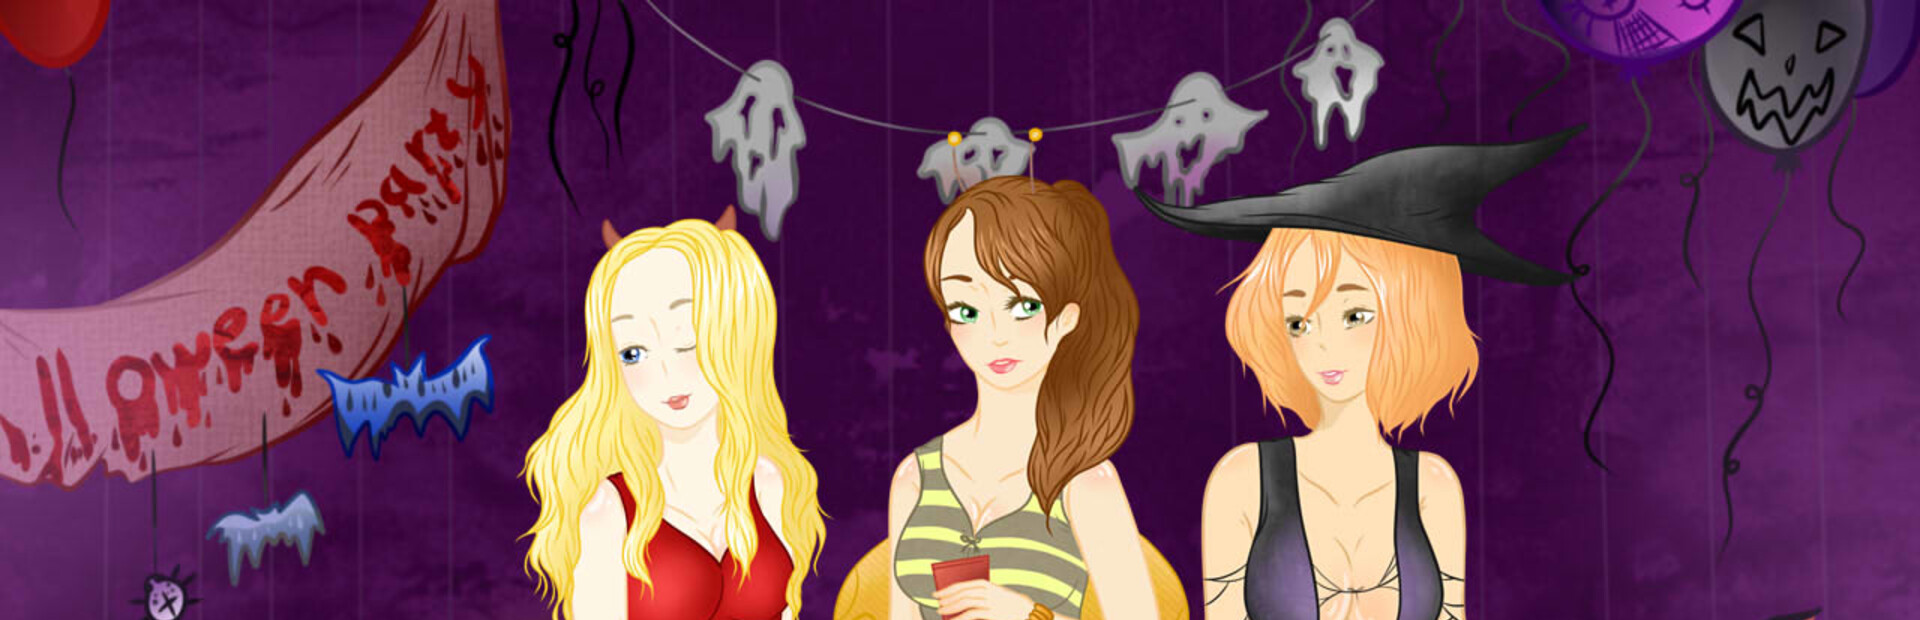 Halloween Girl cover image